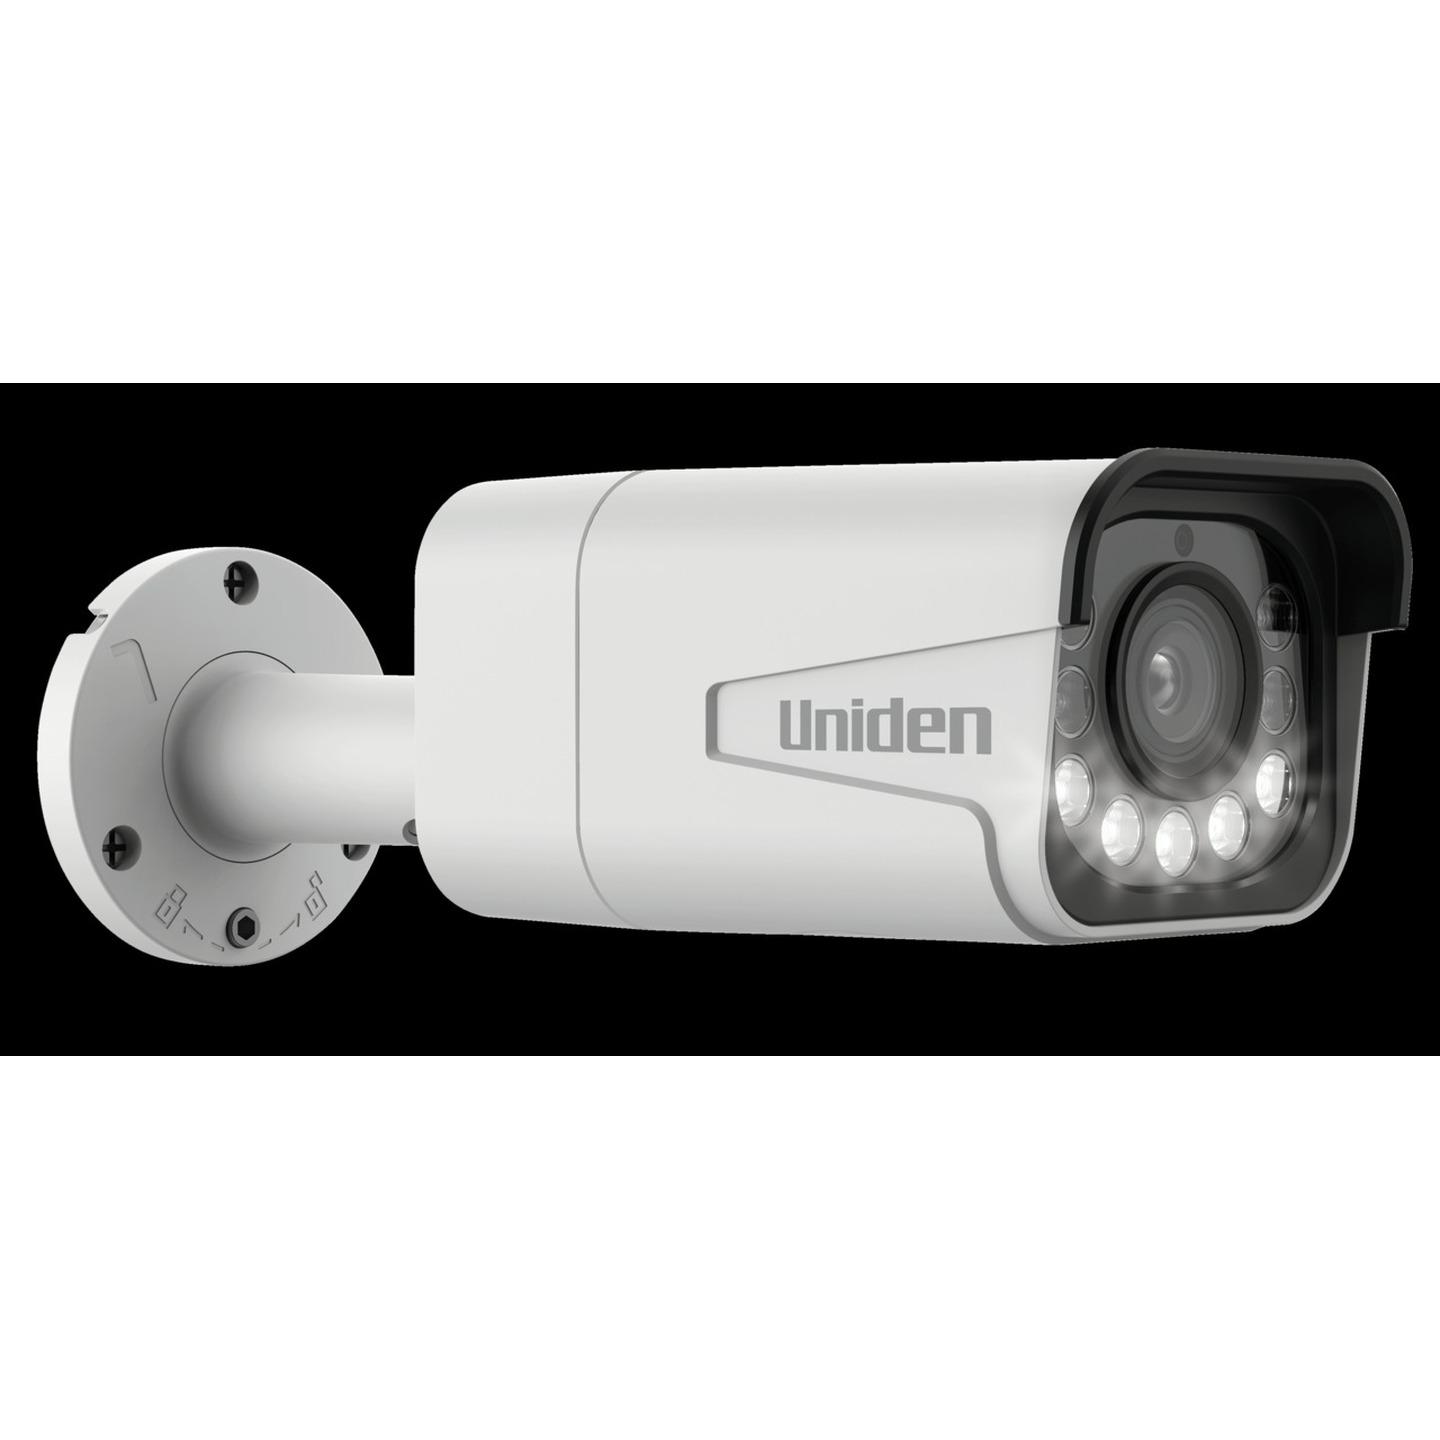 Uniden 4K Bullet IP Camera with Floodlight